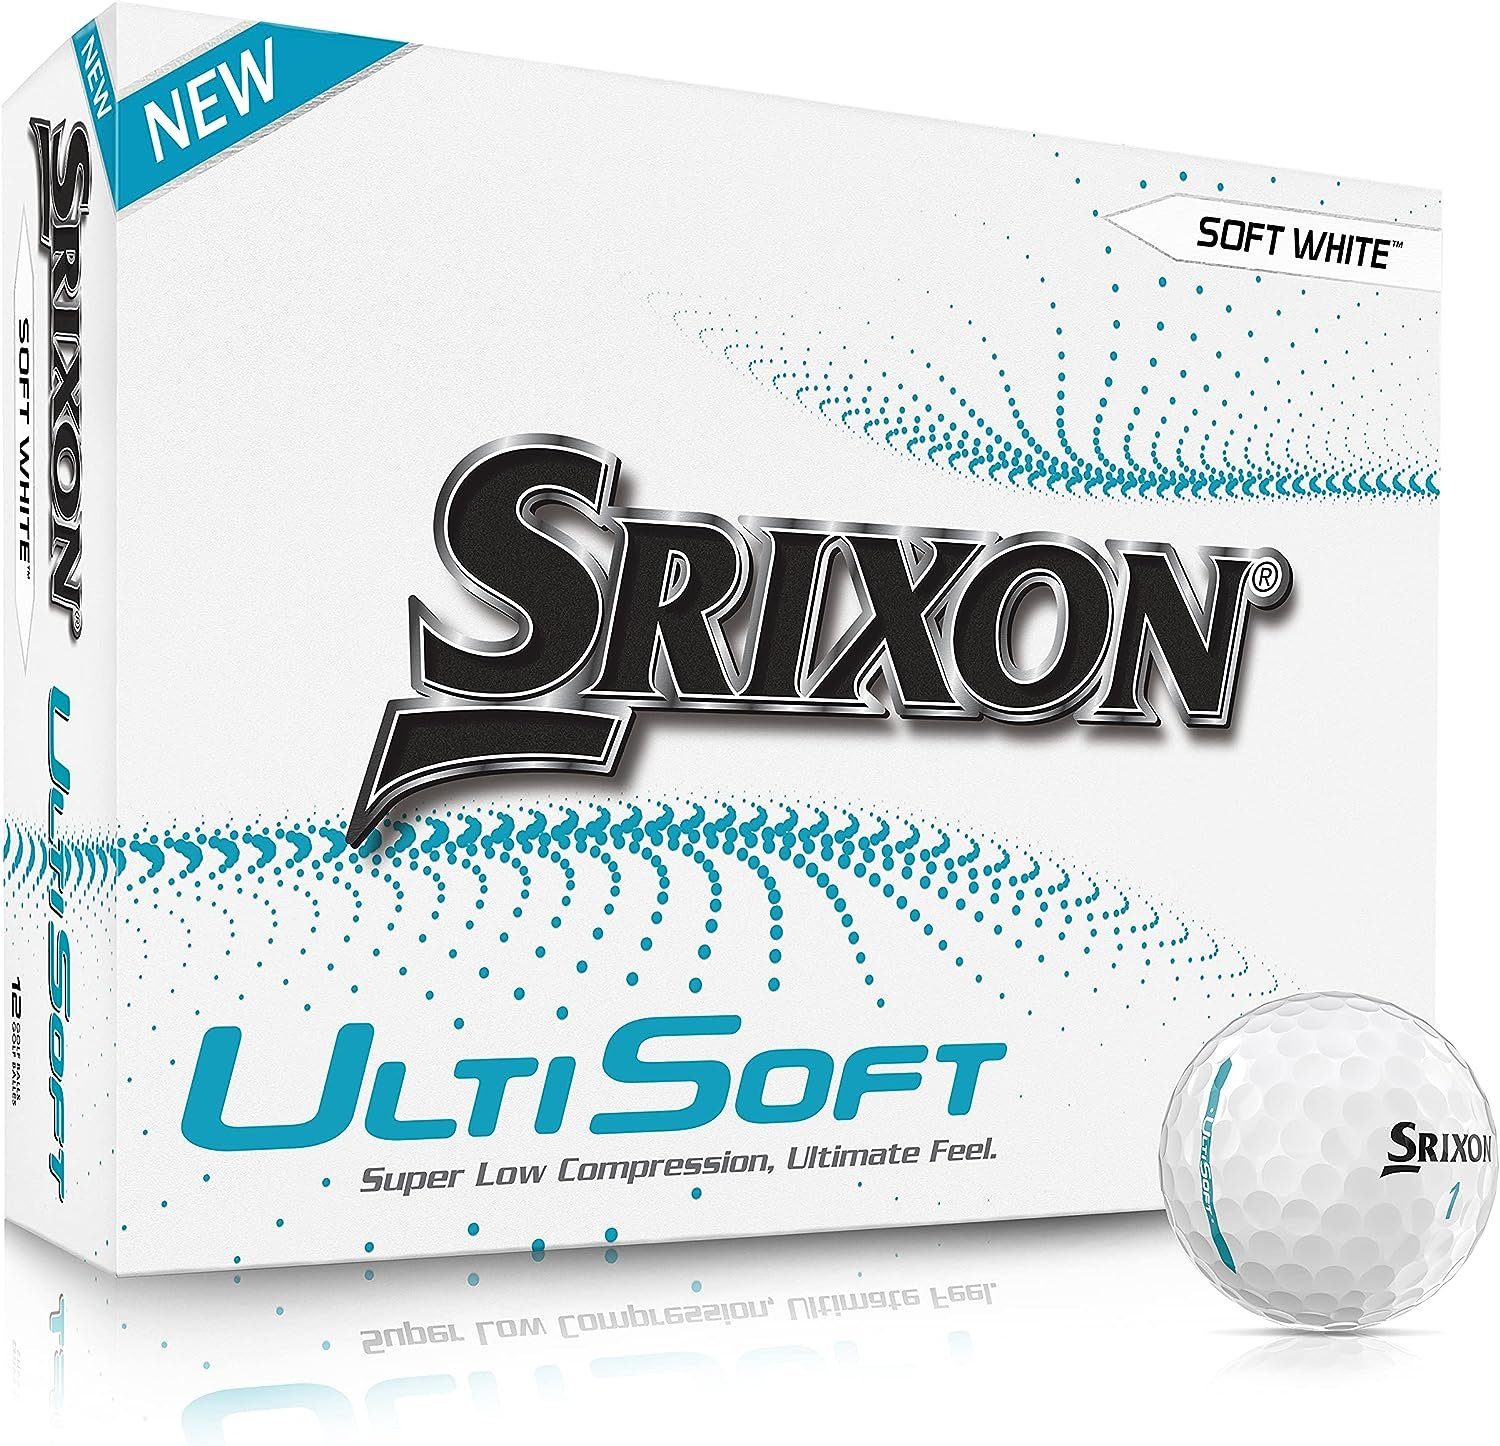 PureWhite Doppelpack Srixon Dutzend Golfball Dutzend) DoppelPack 24, Srixon (2 UltiSoft / Aktion: Golfbälle 2